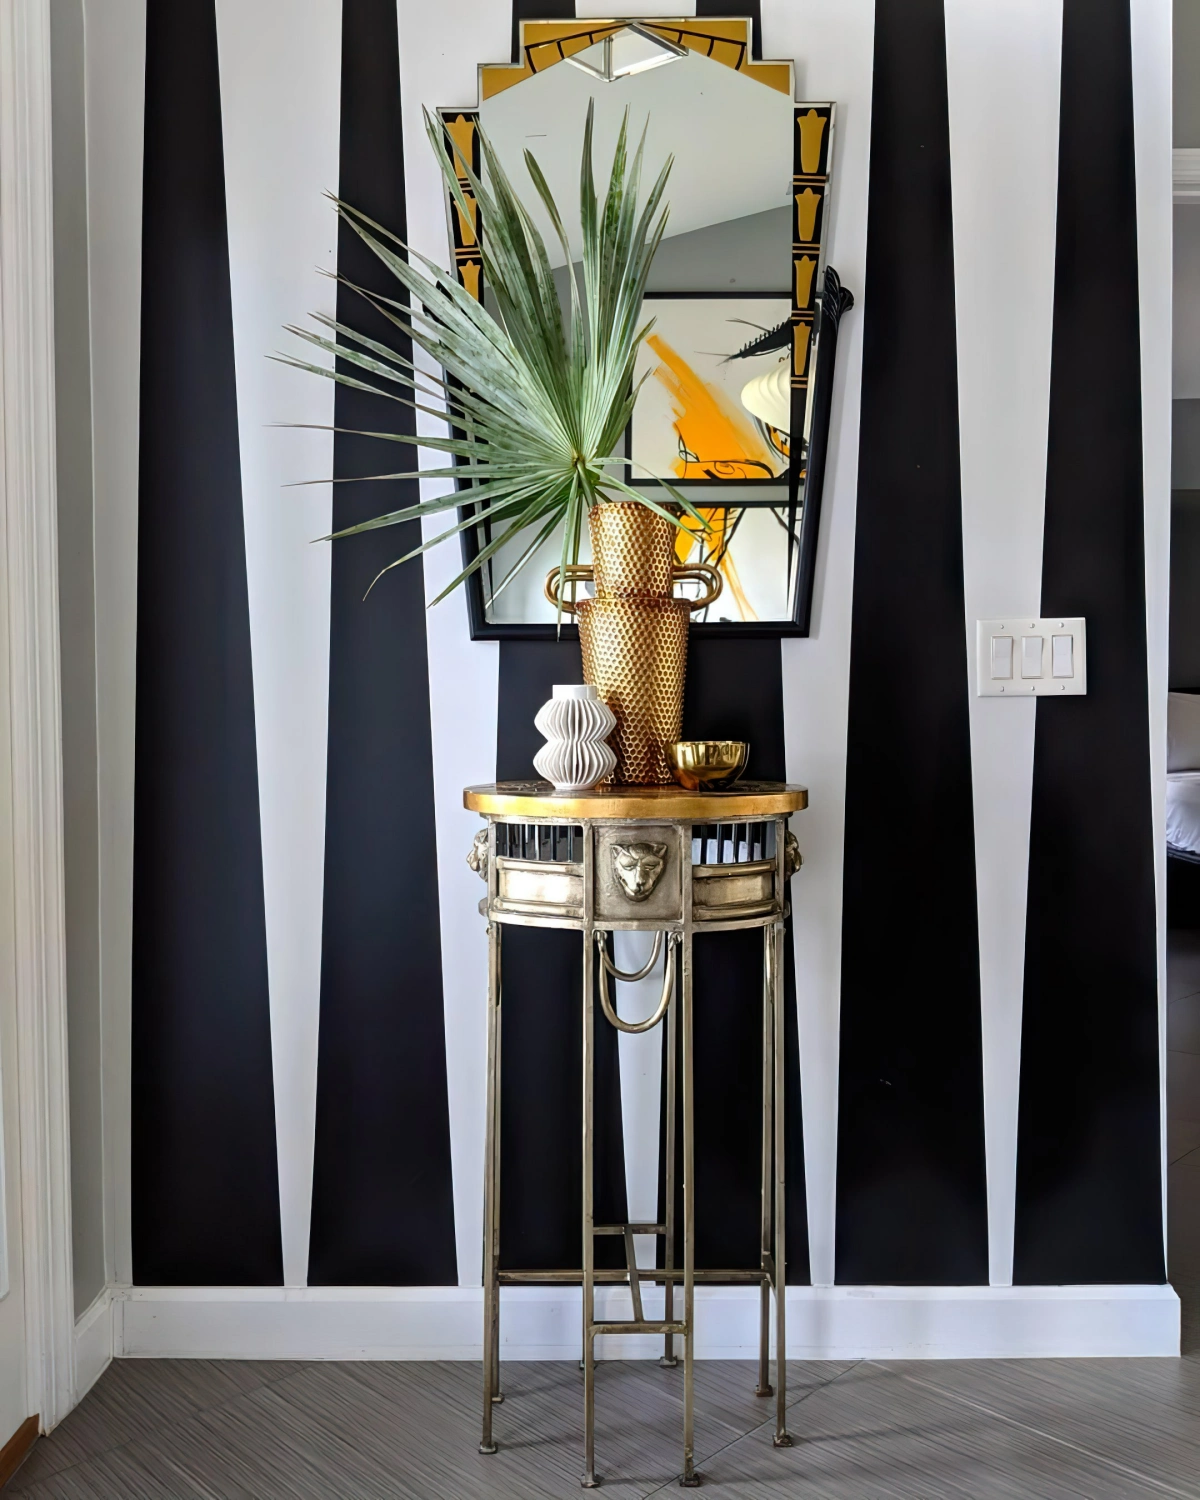 rayures mur blanc et noir peinture effet miroir feuille palmier